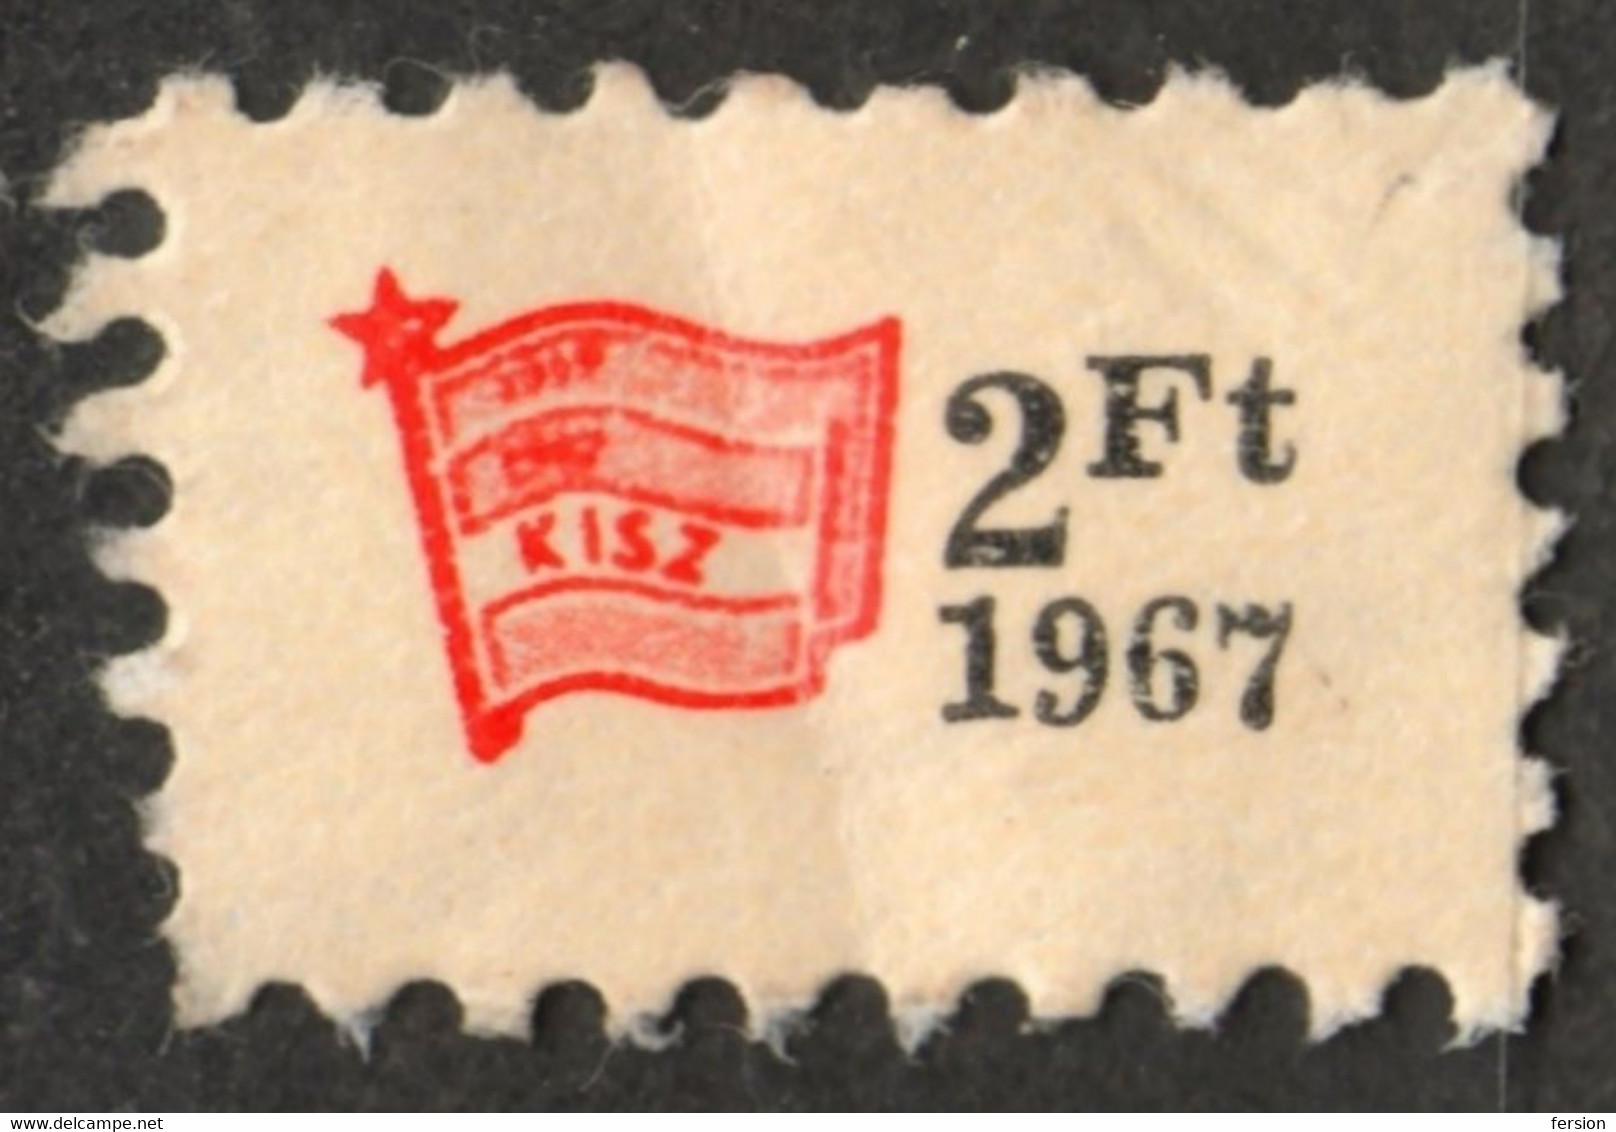 KISZ Hungarian Young Communist League FLAG Red Star - Member Charity LABEL CINDERELLA VIGNETTE - Hungary 1967 - Dienstzegels